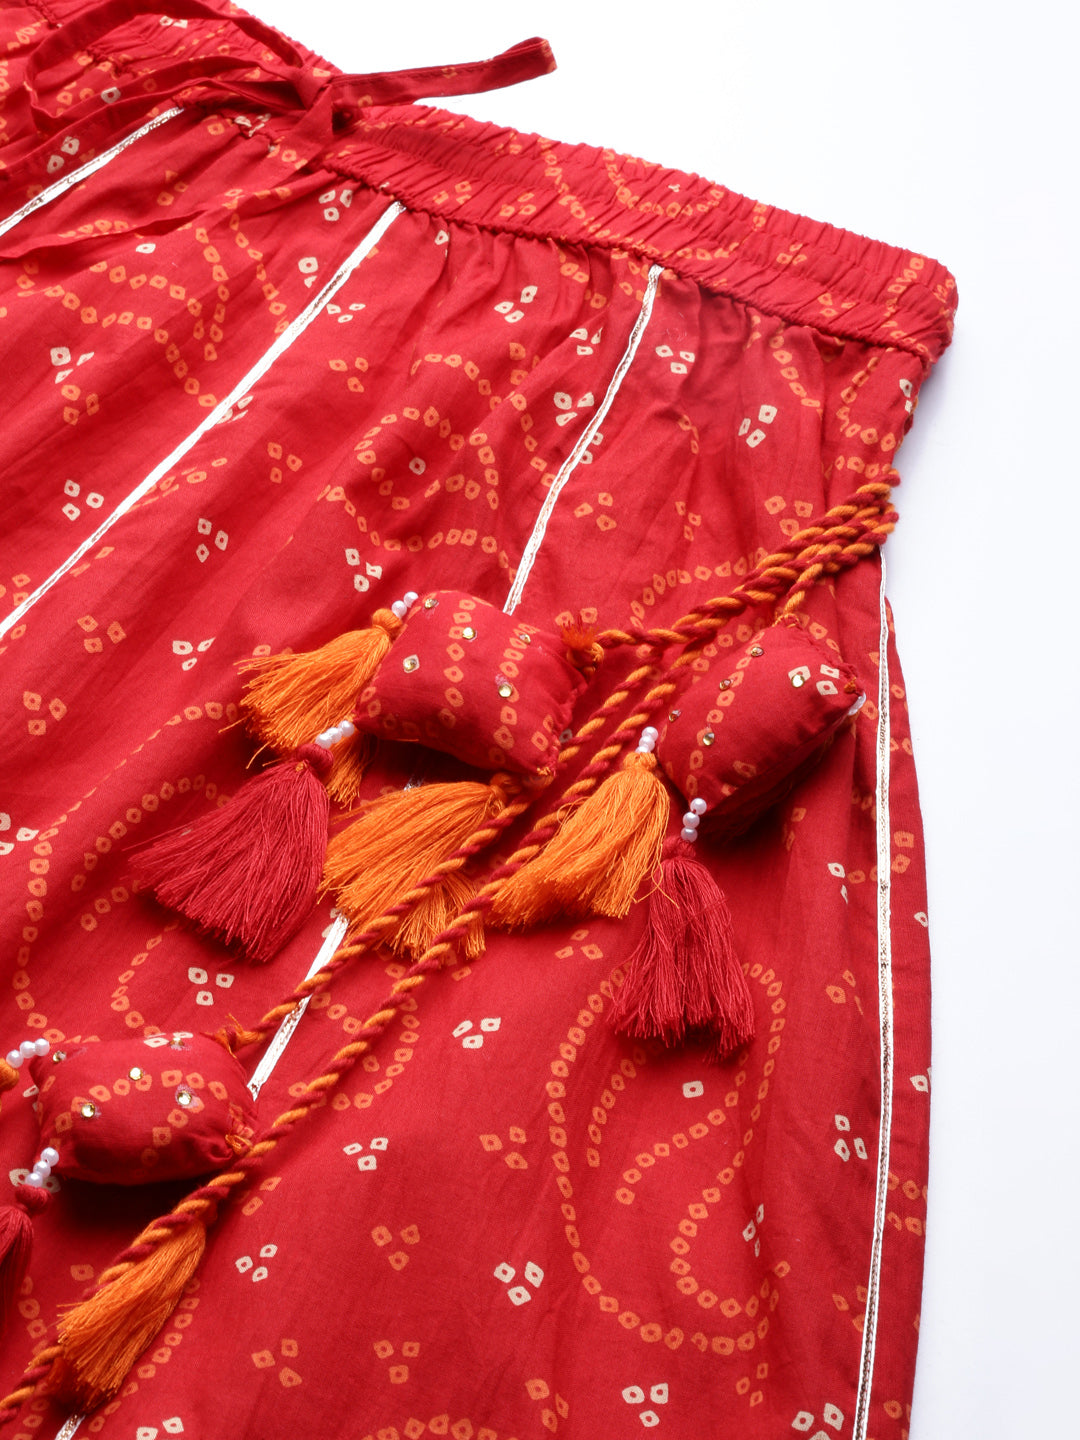 Ishin Women's Cotton Red Bandhani Print Embellished Crop Top With Skirt